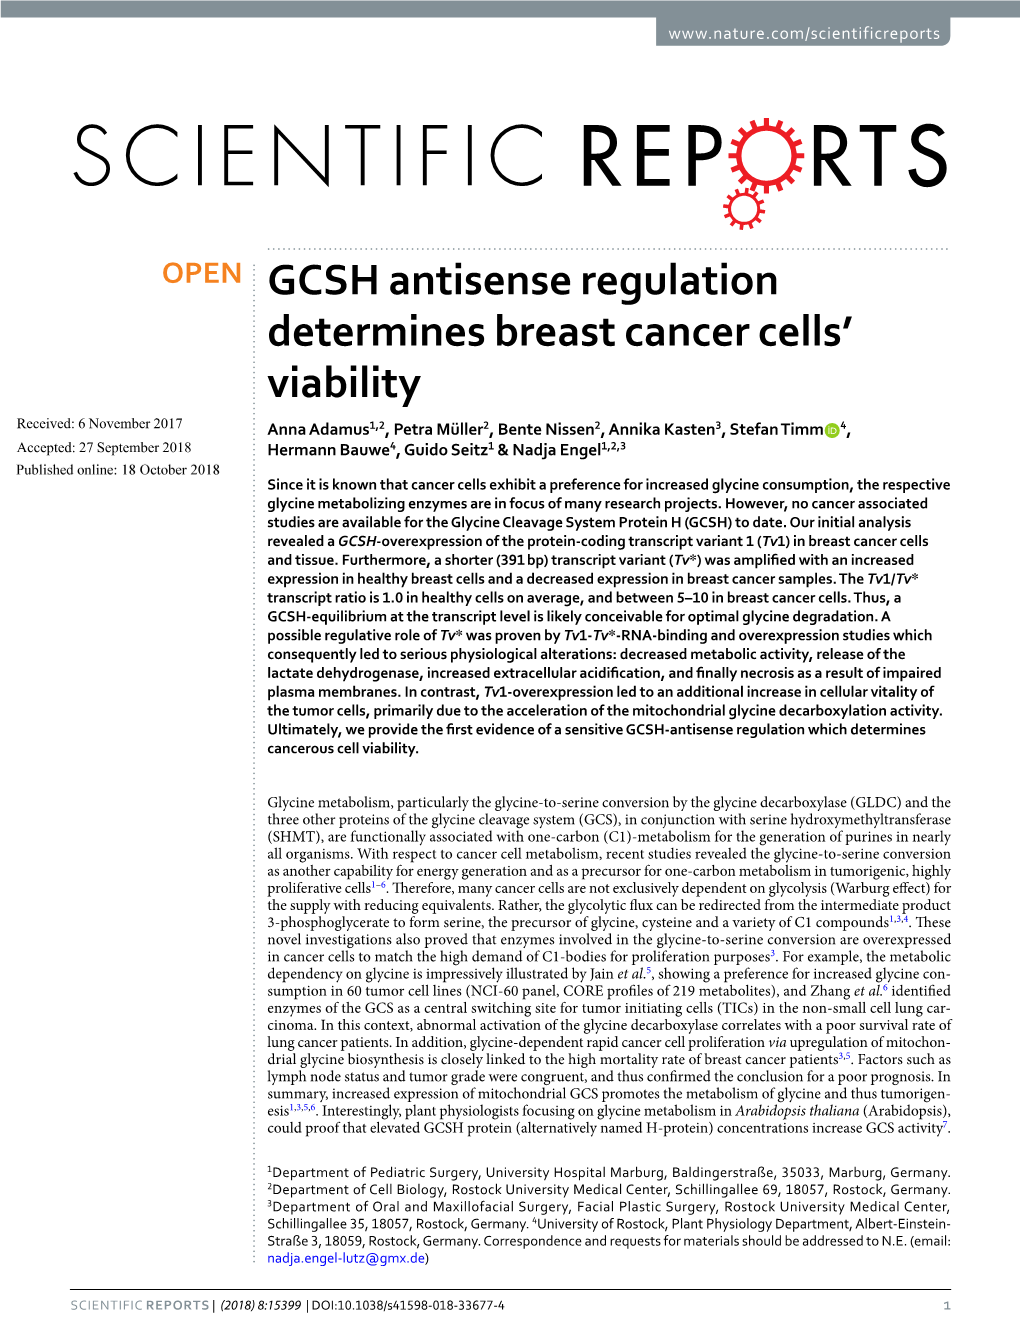 GCSH Antisense Regulation Determines Breast Cancer Cells' Viability